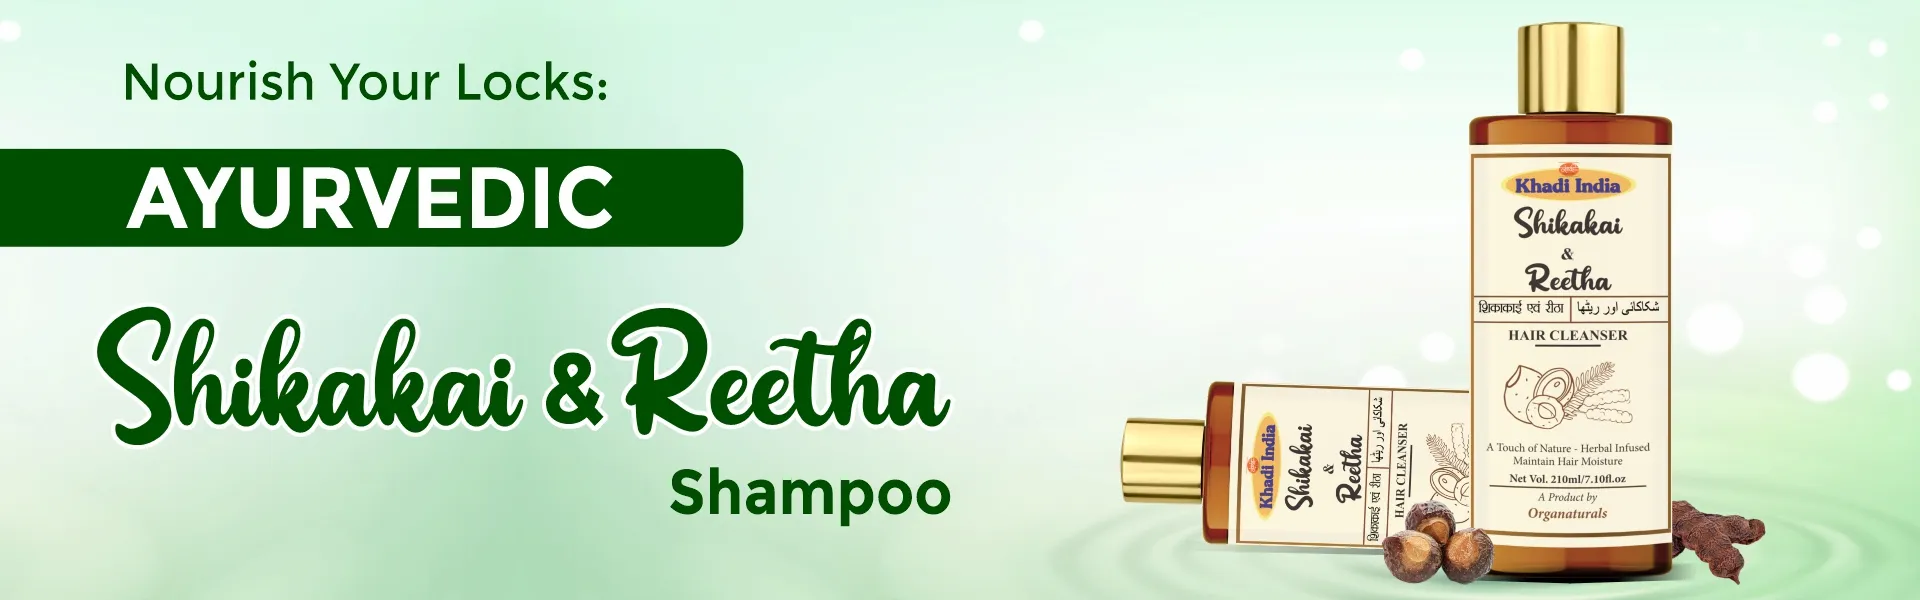 Shikakai & Reetha shampoo - www.dkihenna.com